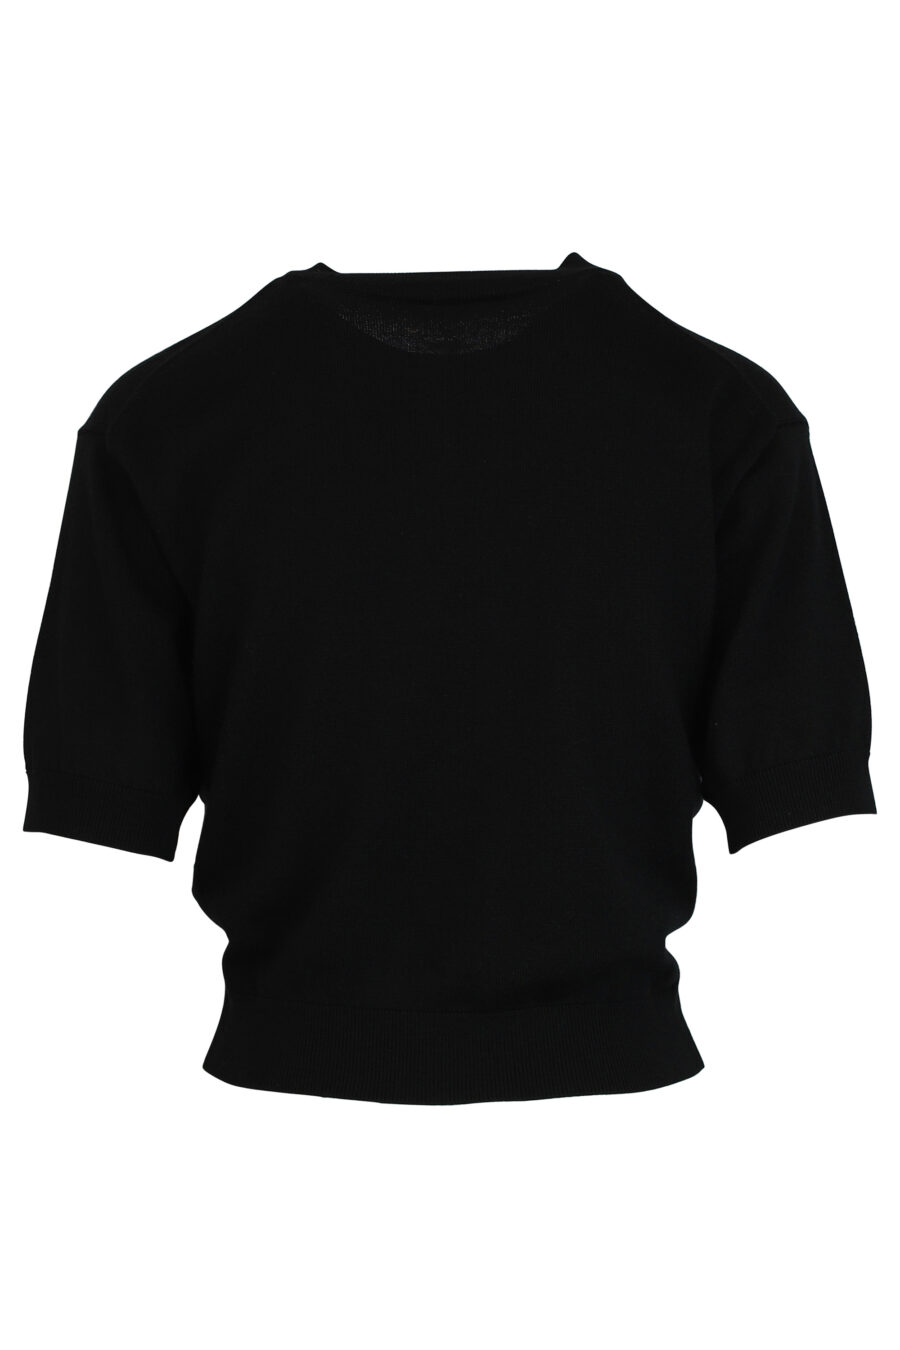 Black jumper with orange mini-logo - 3612230446106 2